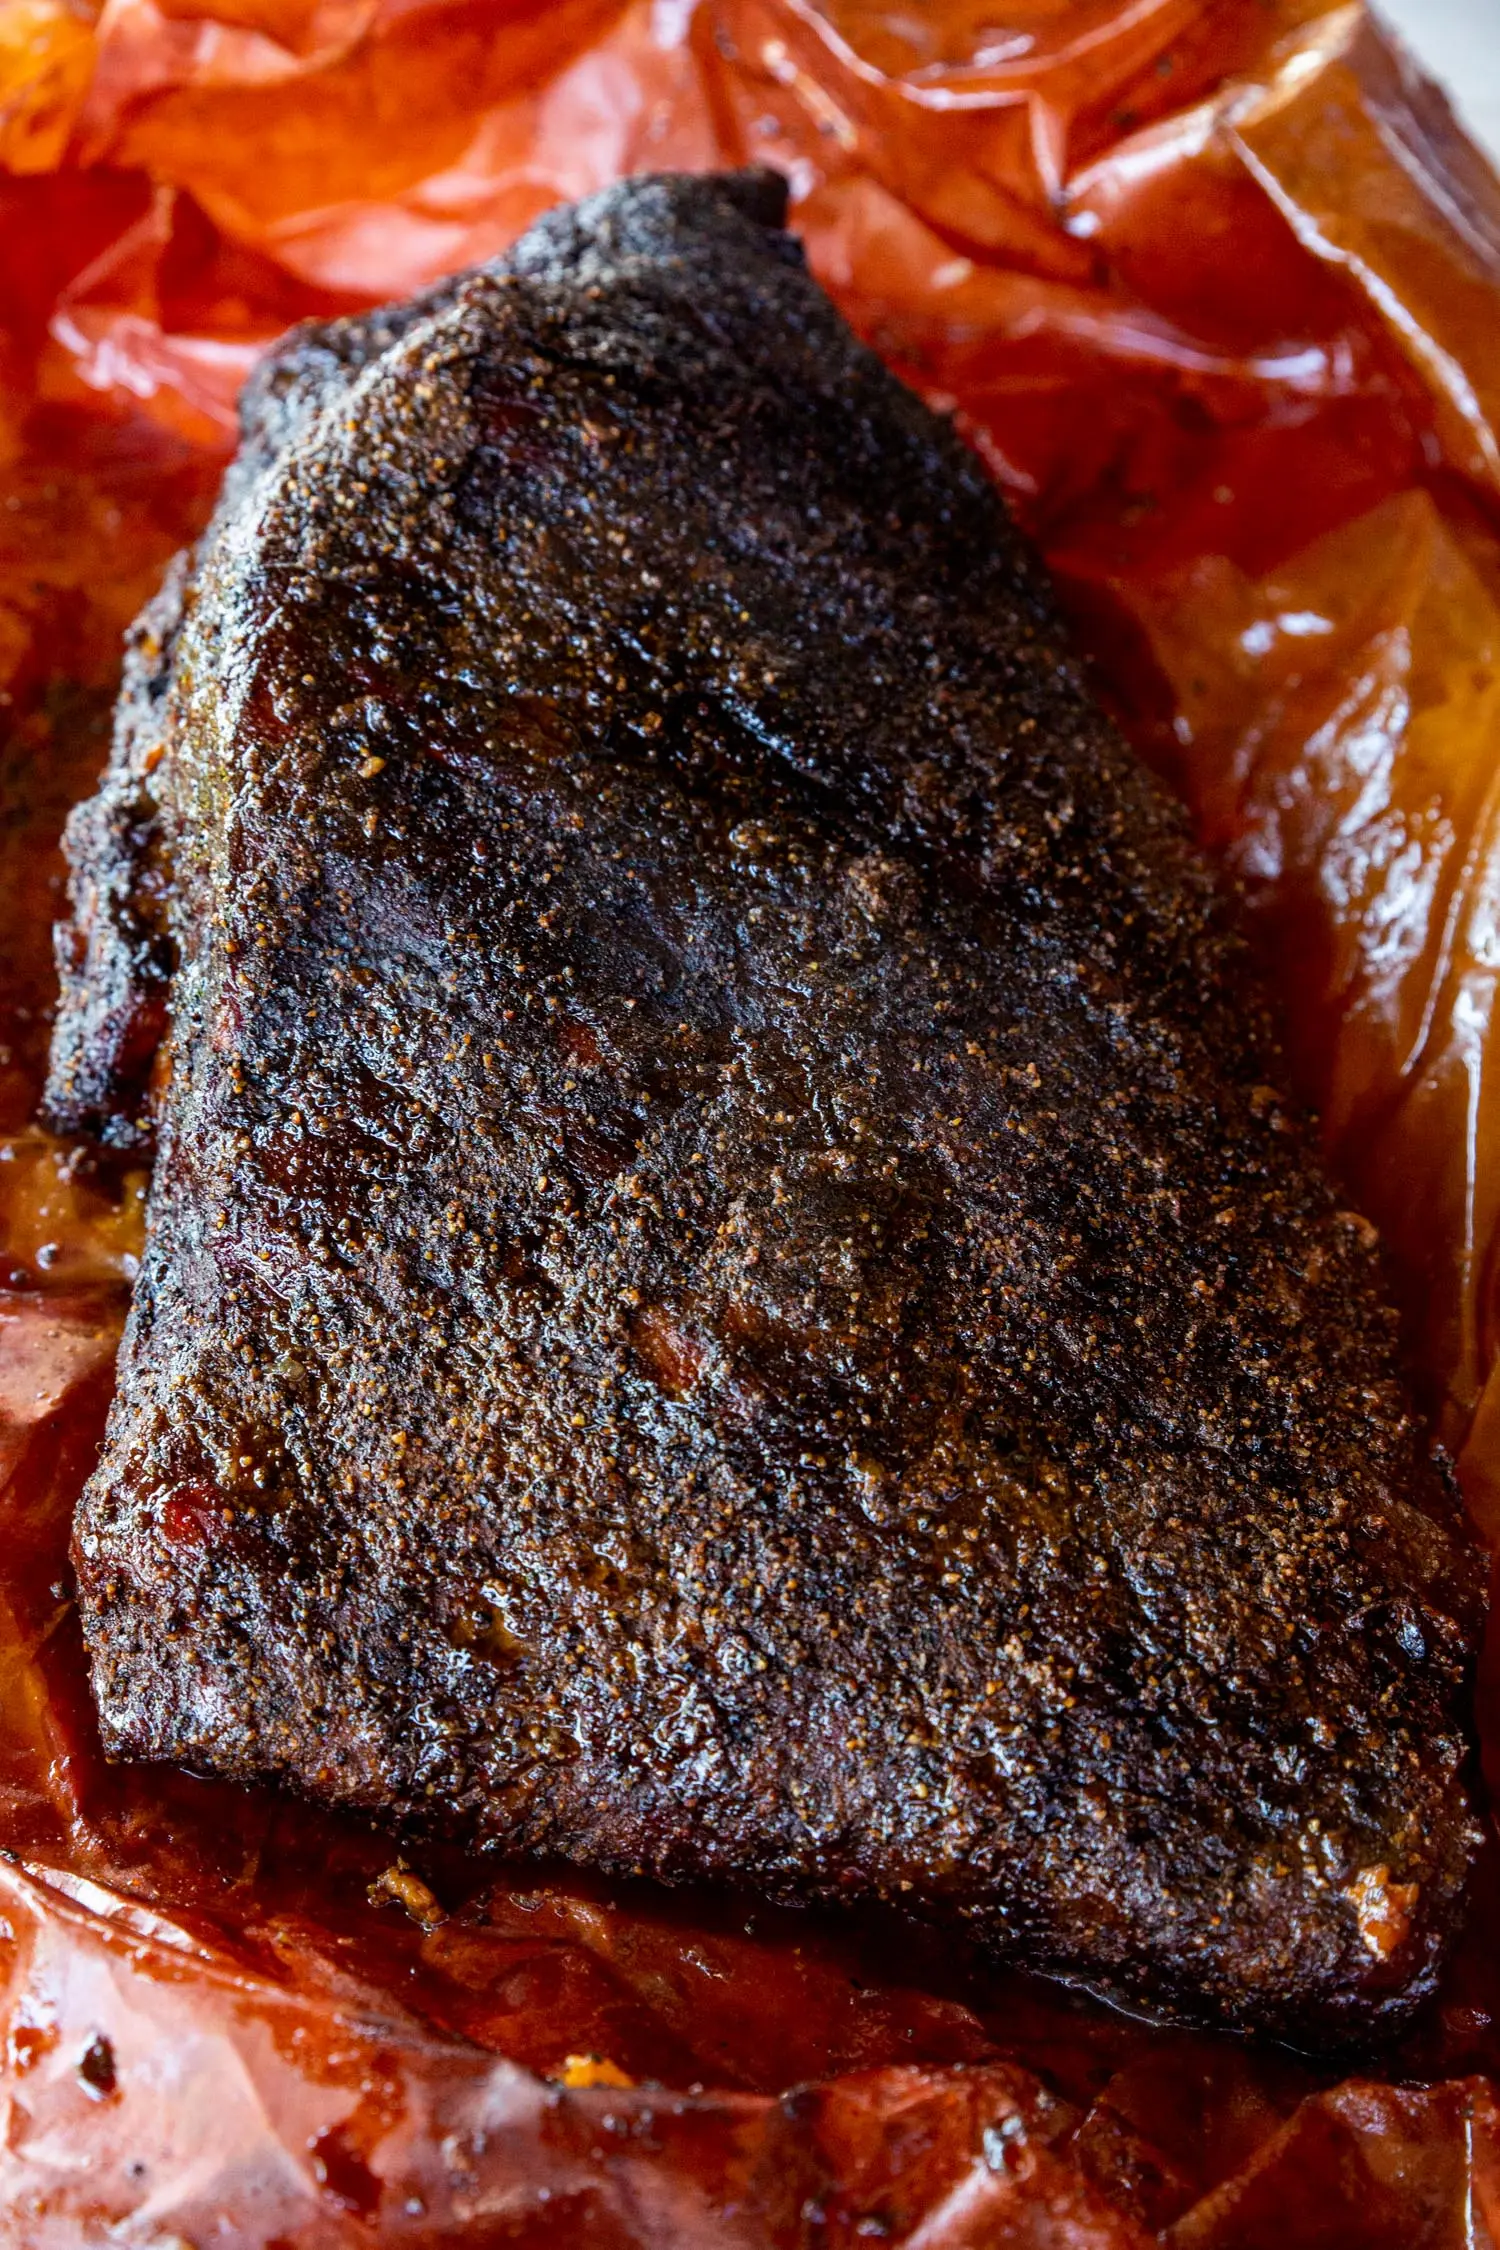 smoked beef brisket time per pound - How long to smoke a brisket at 225 per pound